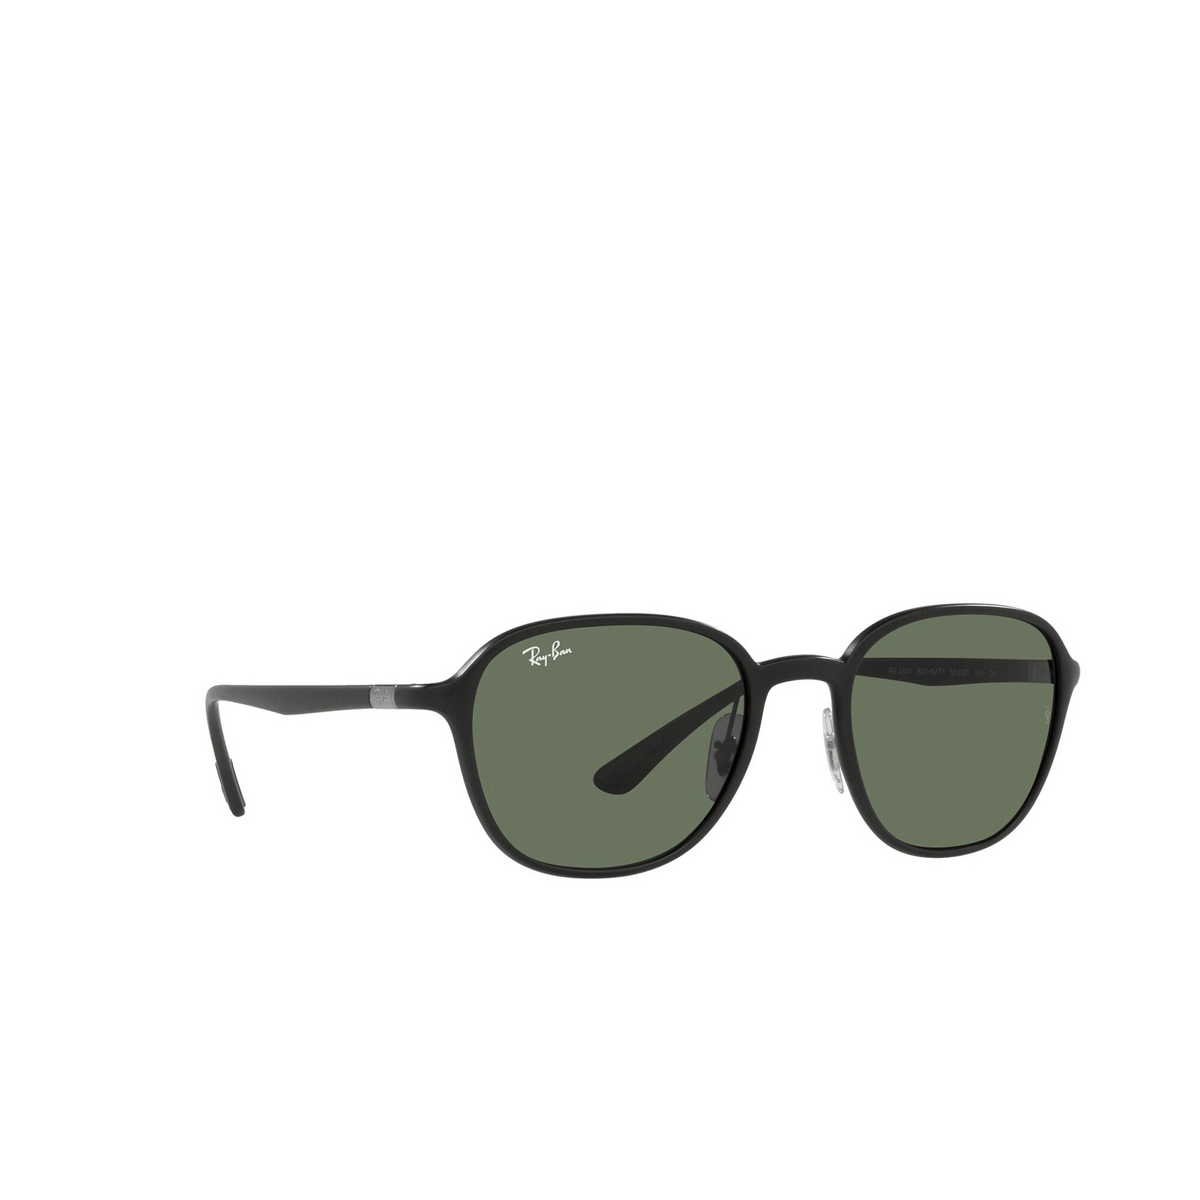 Ray-Ban® Square Sunglasses: RB4341 color Sanding Black 601S71 - three-quarters view.